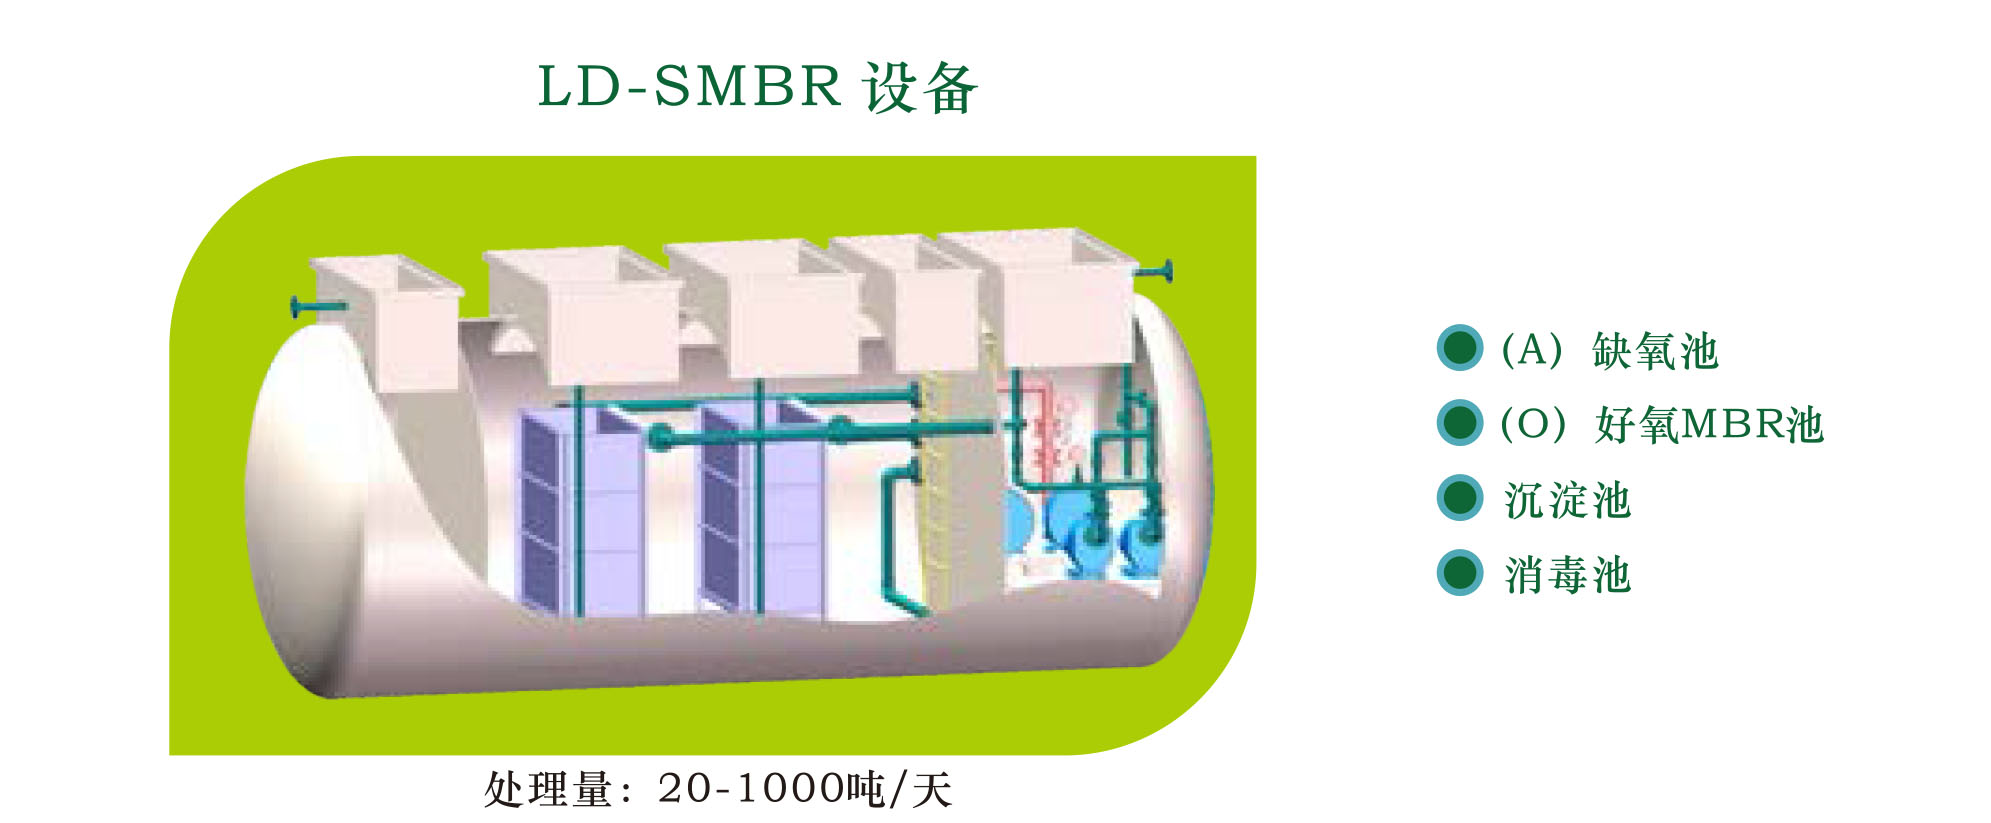 LD-SMBR一体化污水处理设备